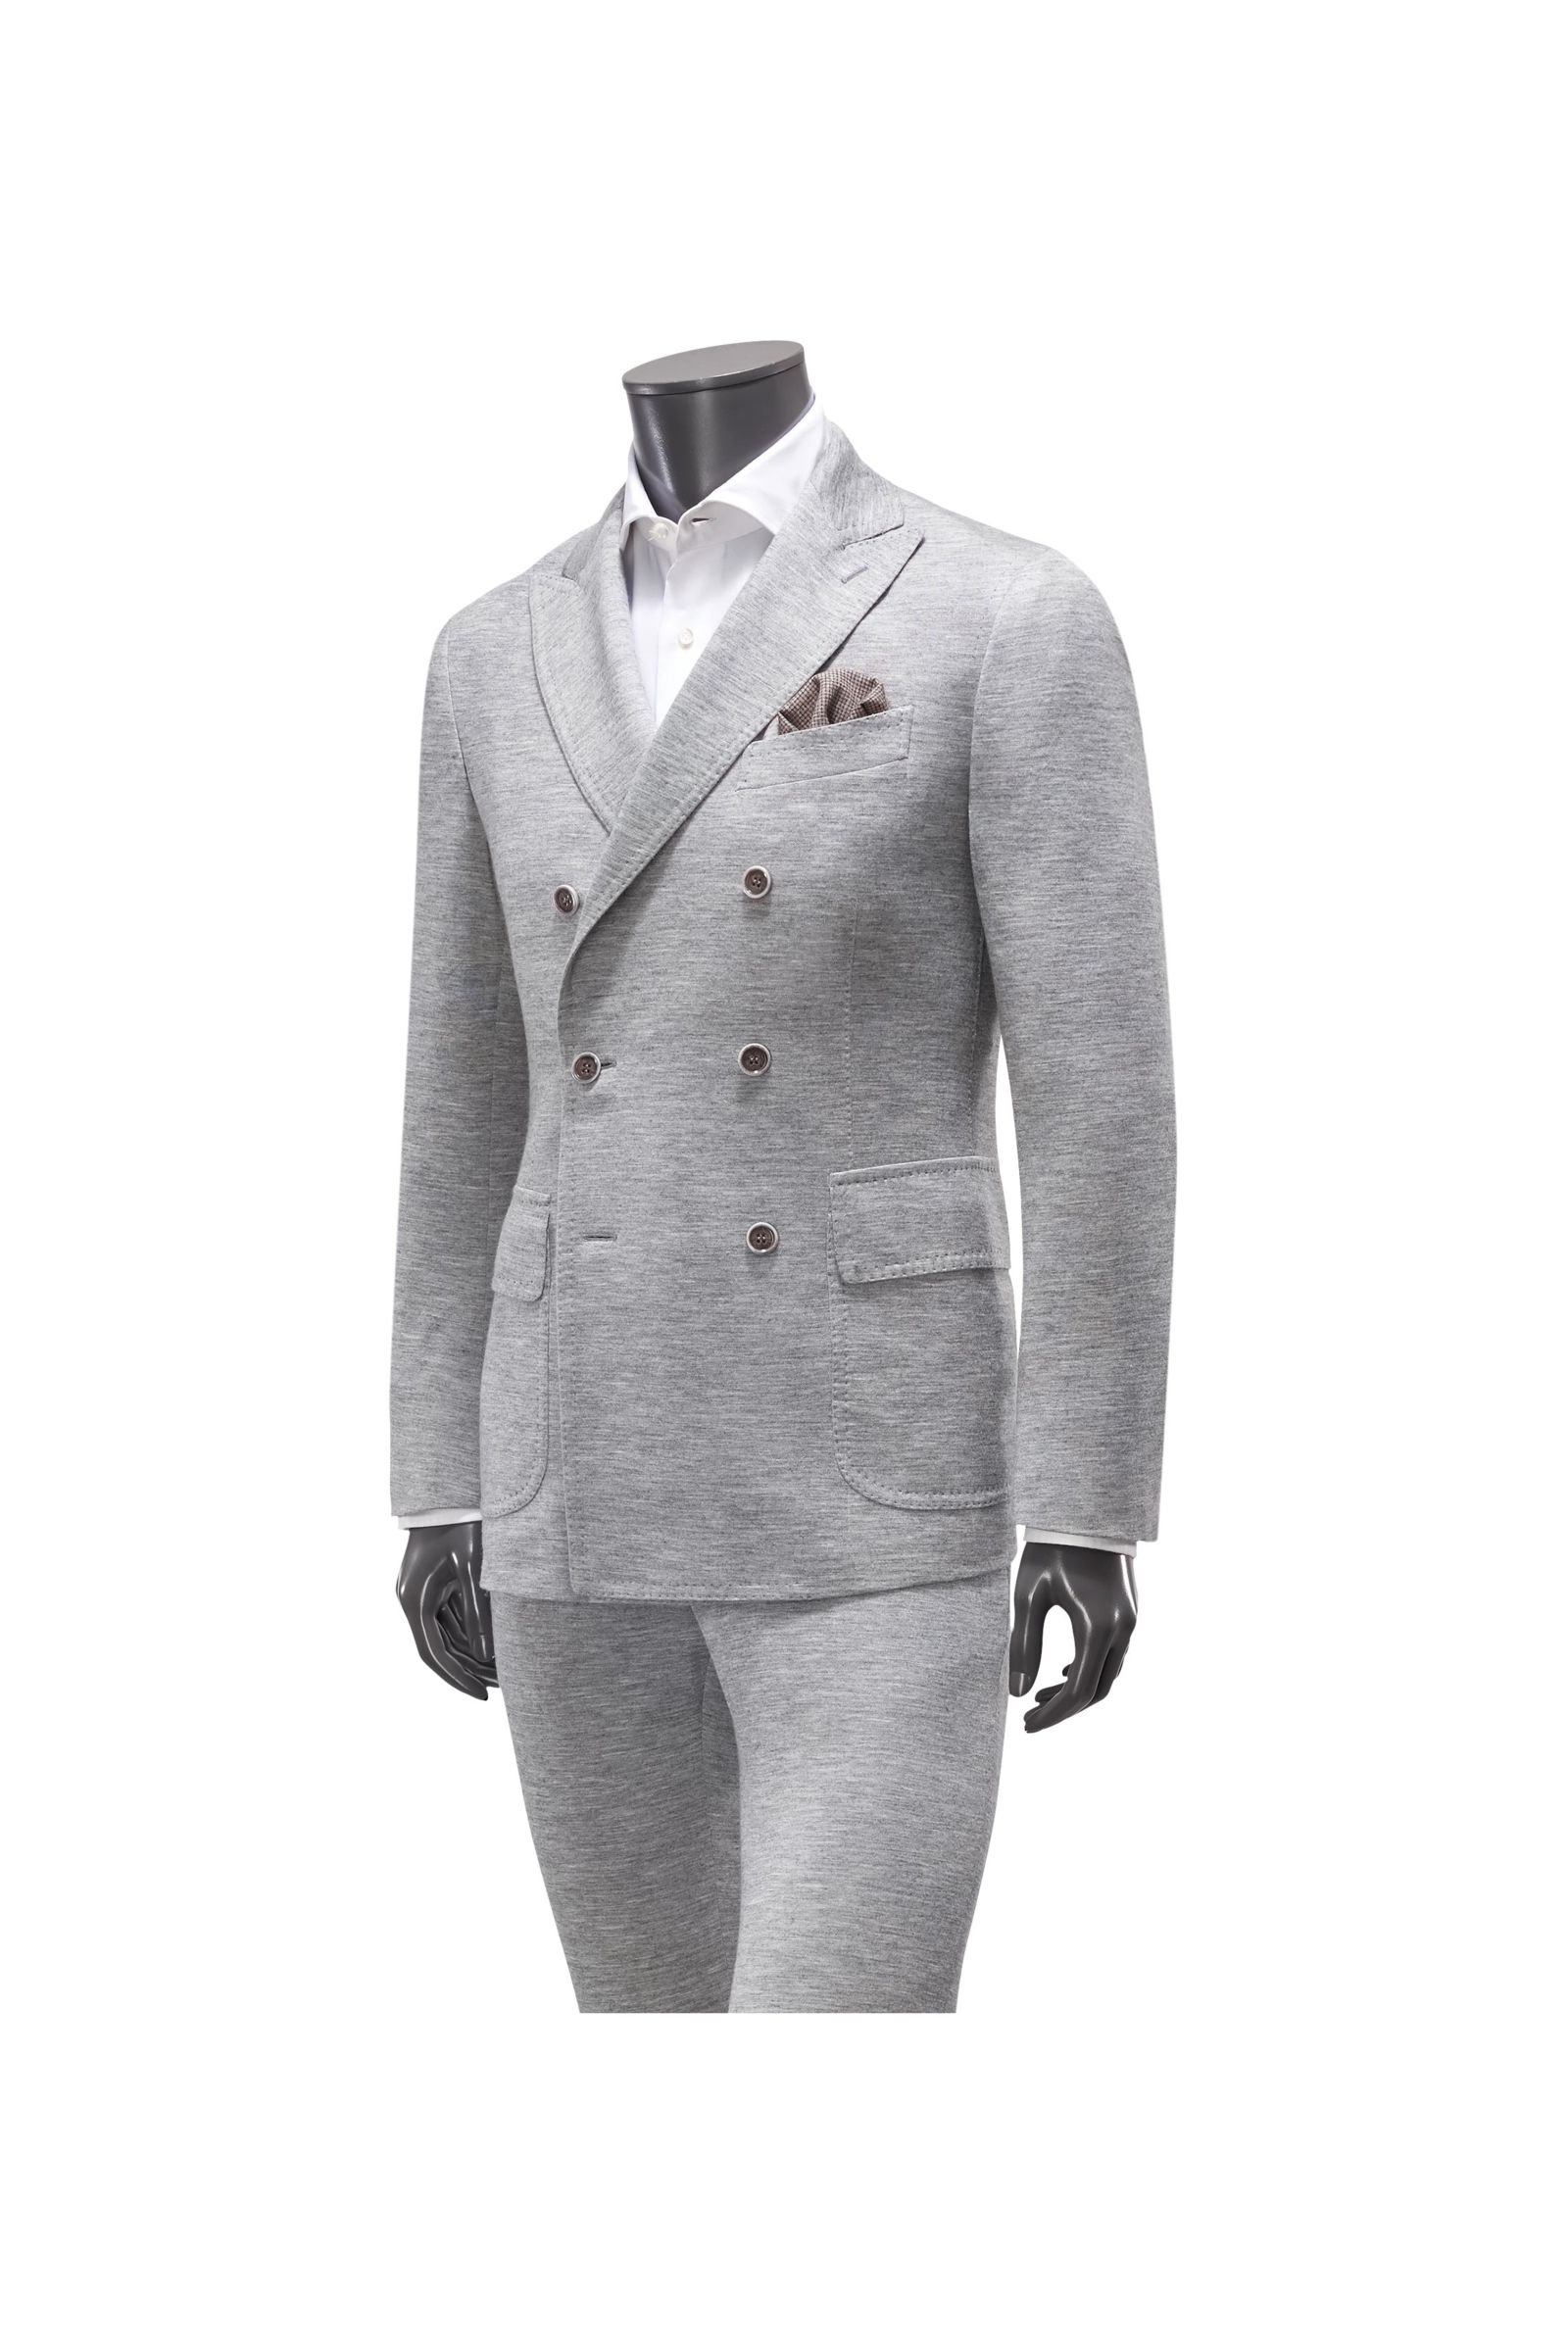 Jersey suit grey